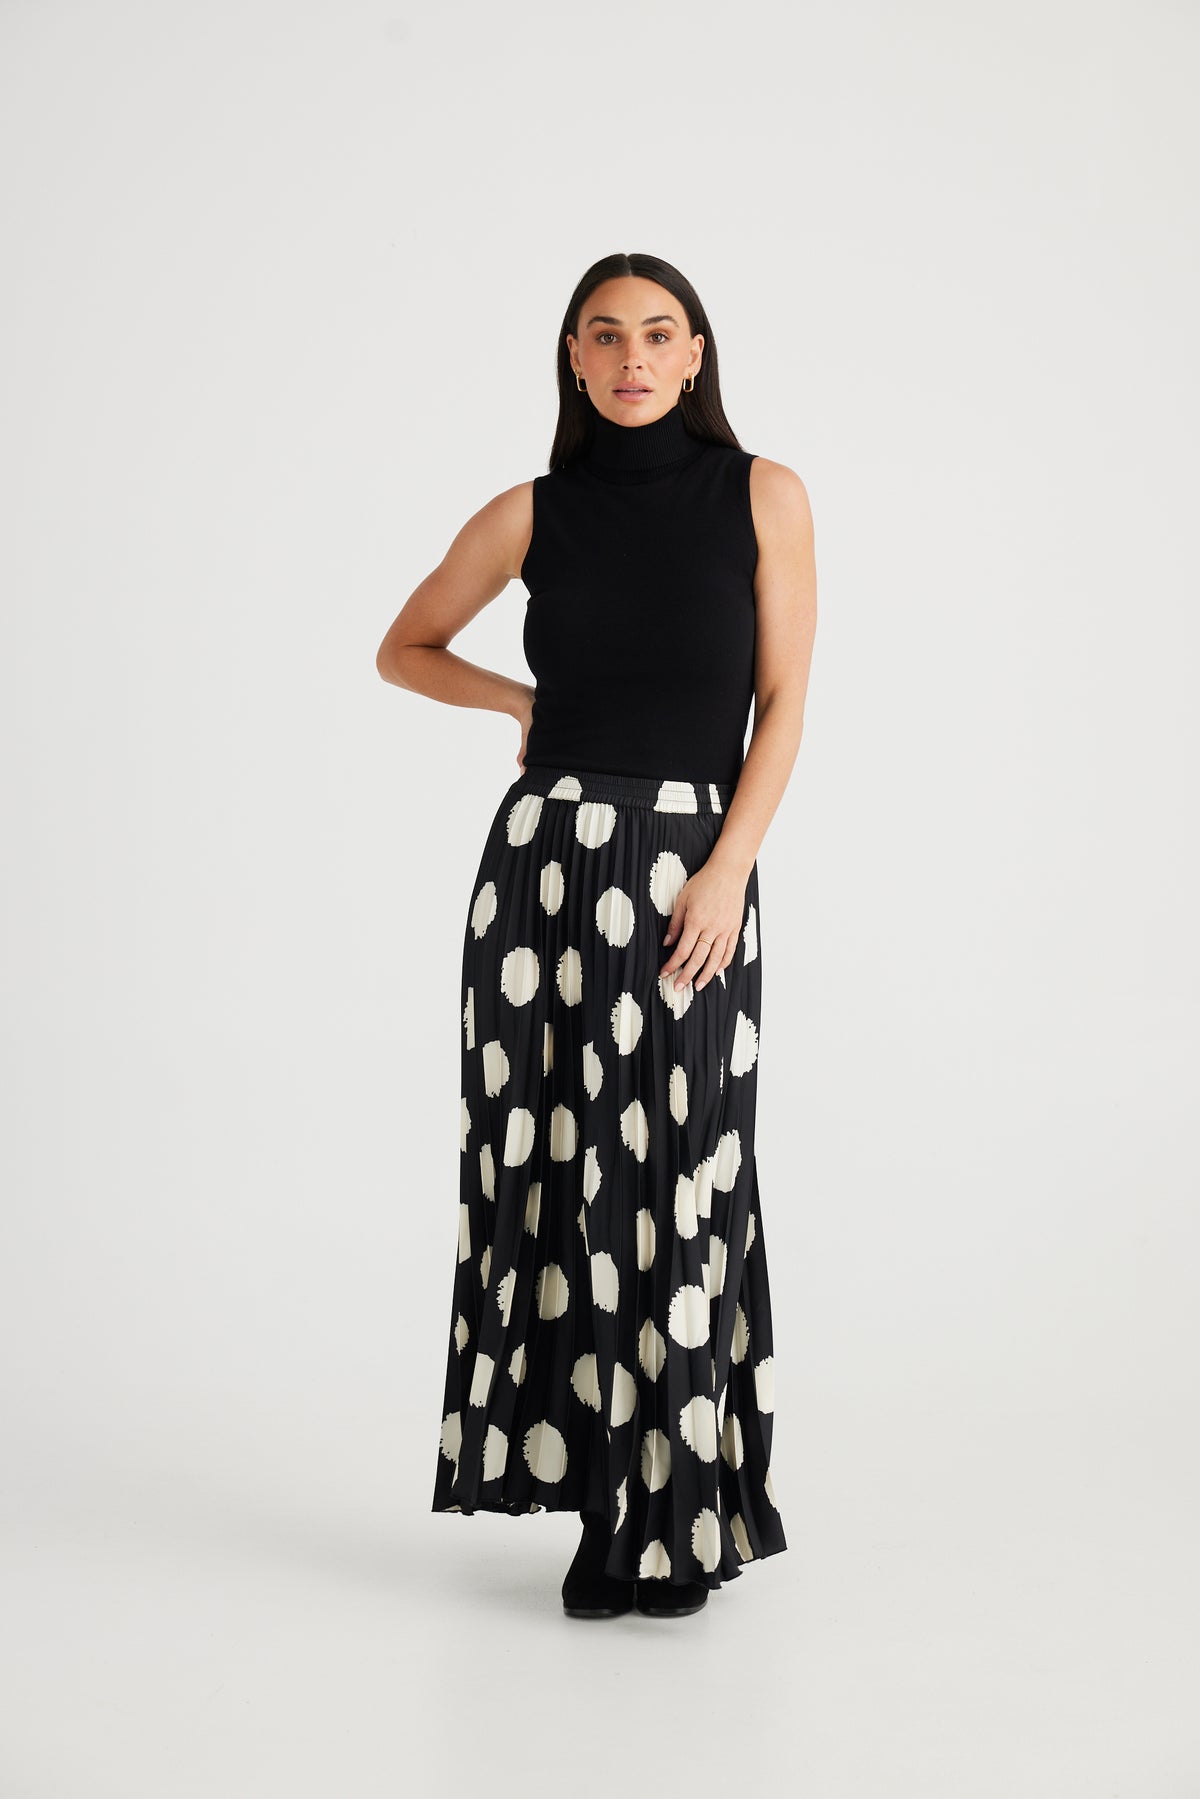 Alias Pleated Skirt Black With Ivory Spot